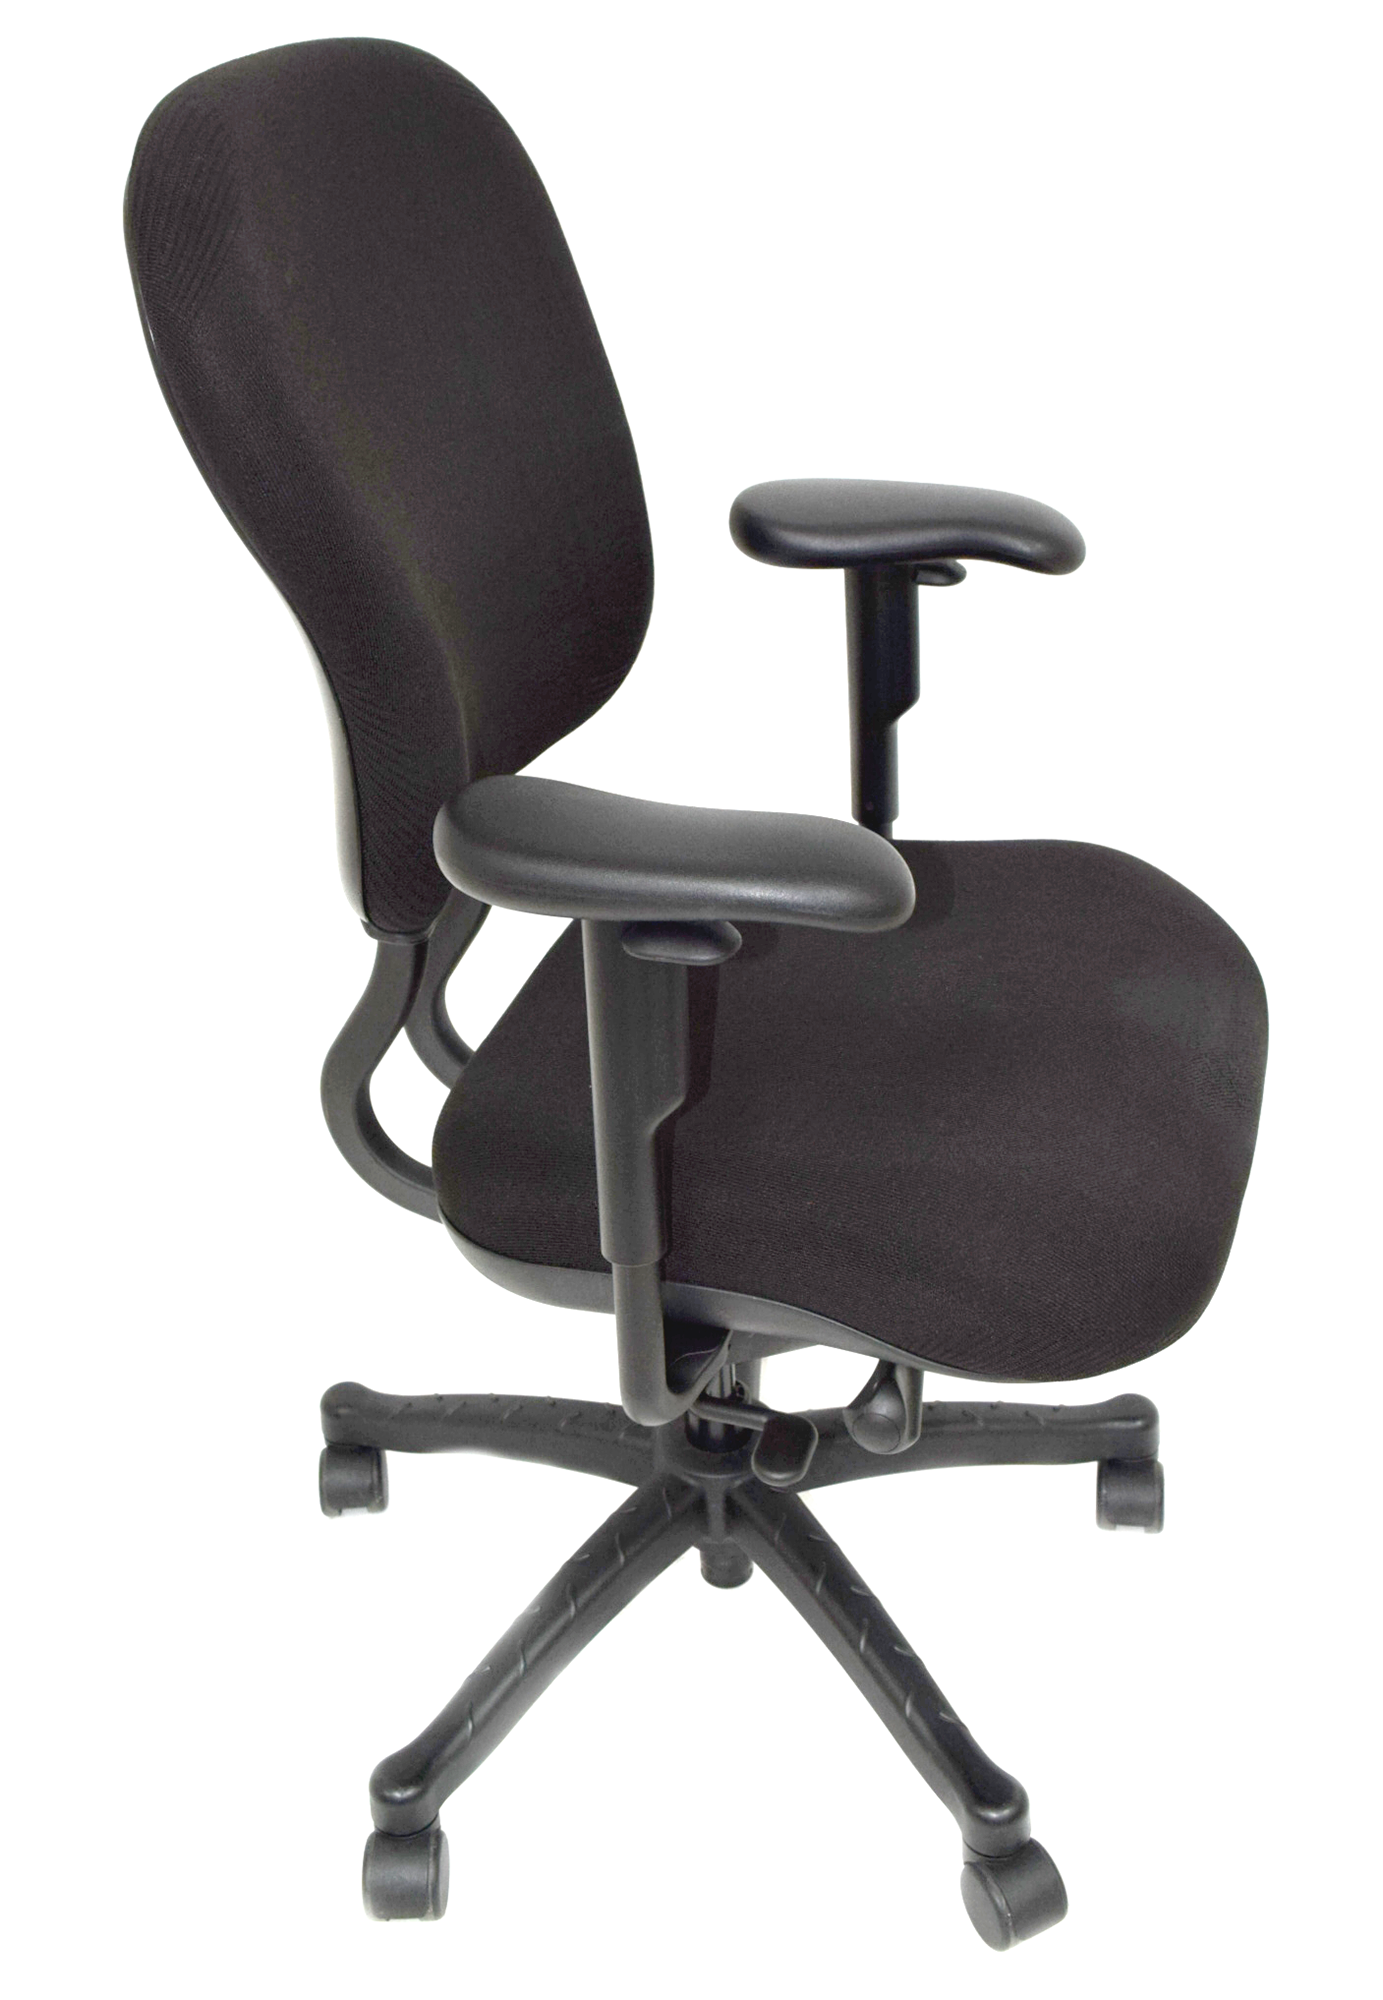 Knoll RPM Used Ergonomic High Back Task Chairs, Black - National Office  Interiors and Liquidators